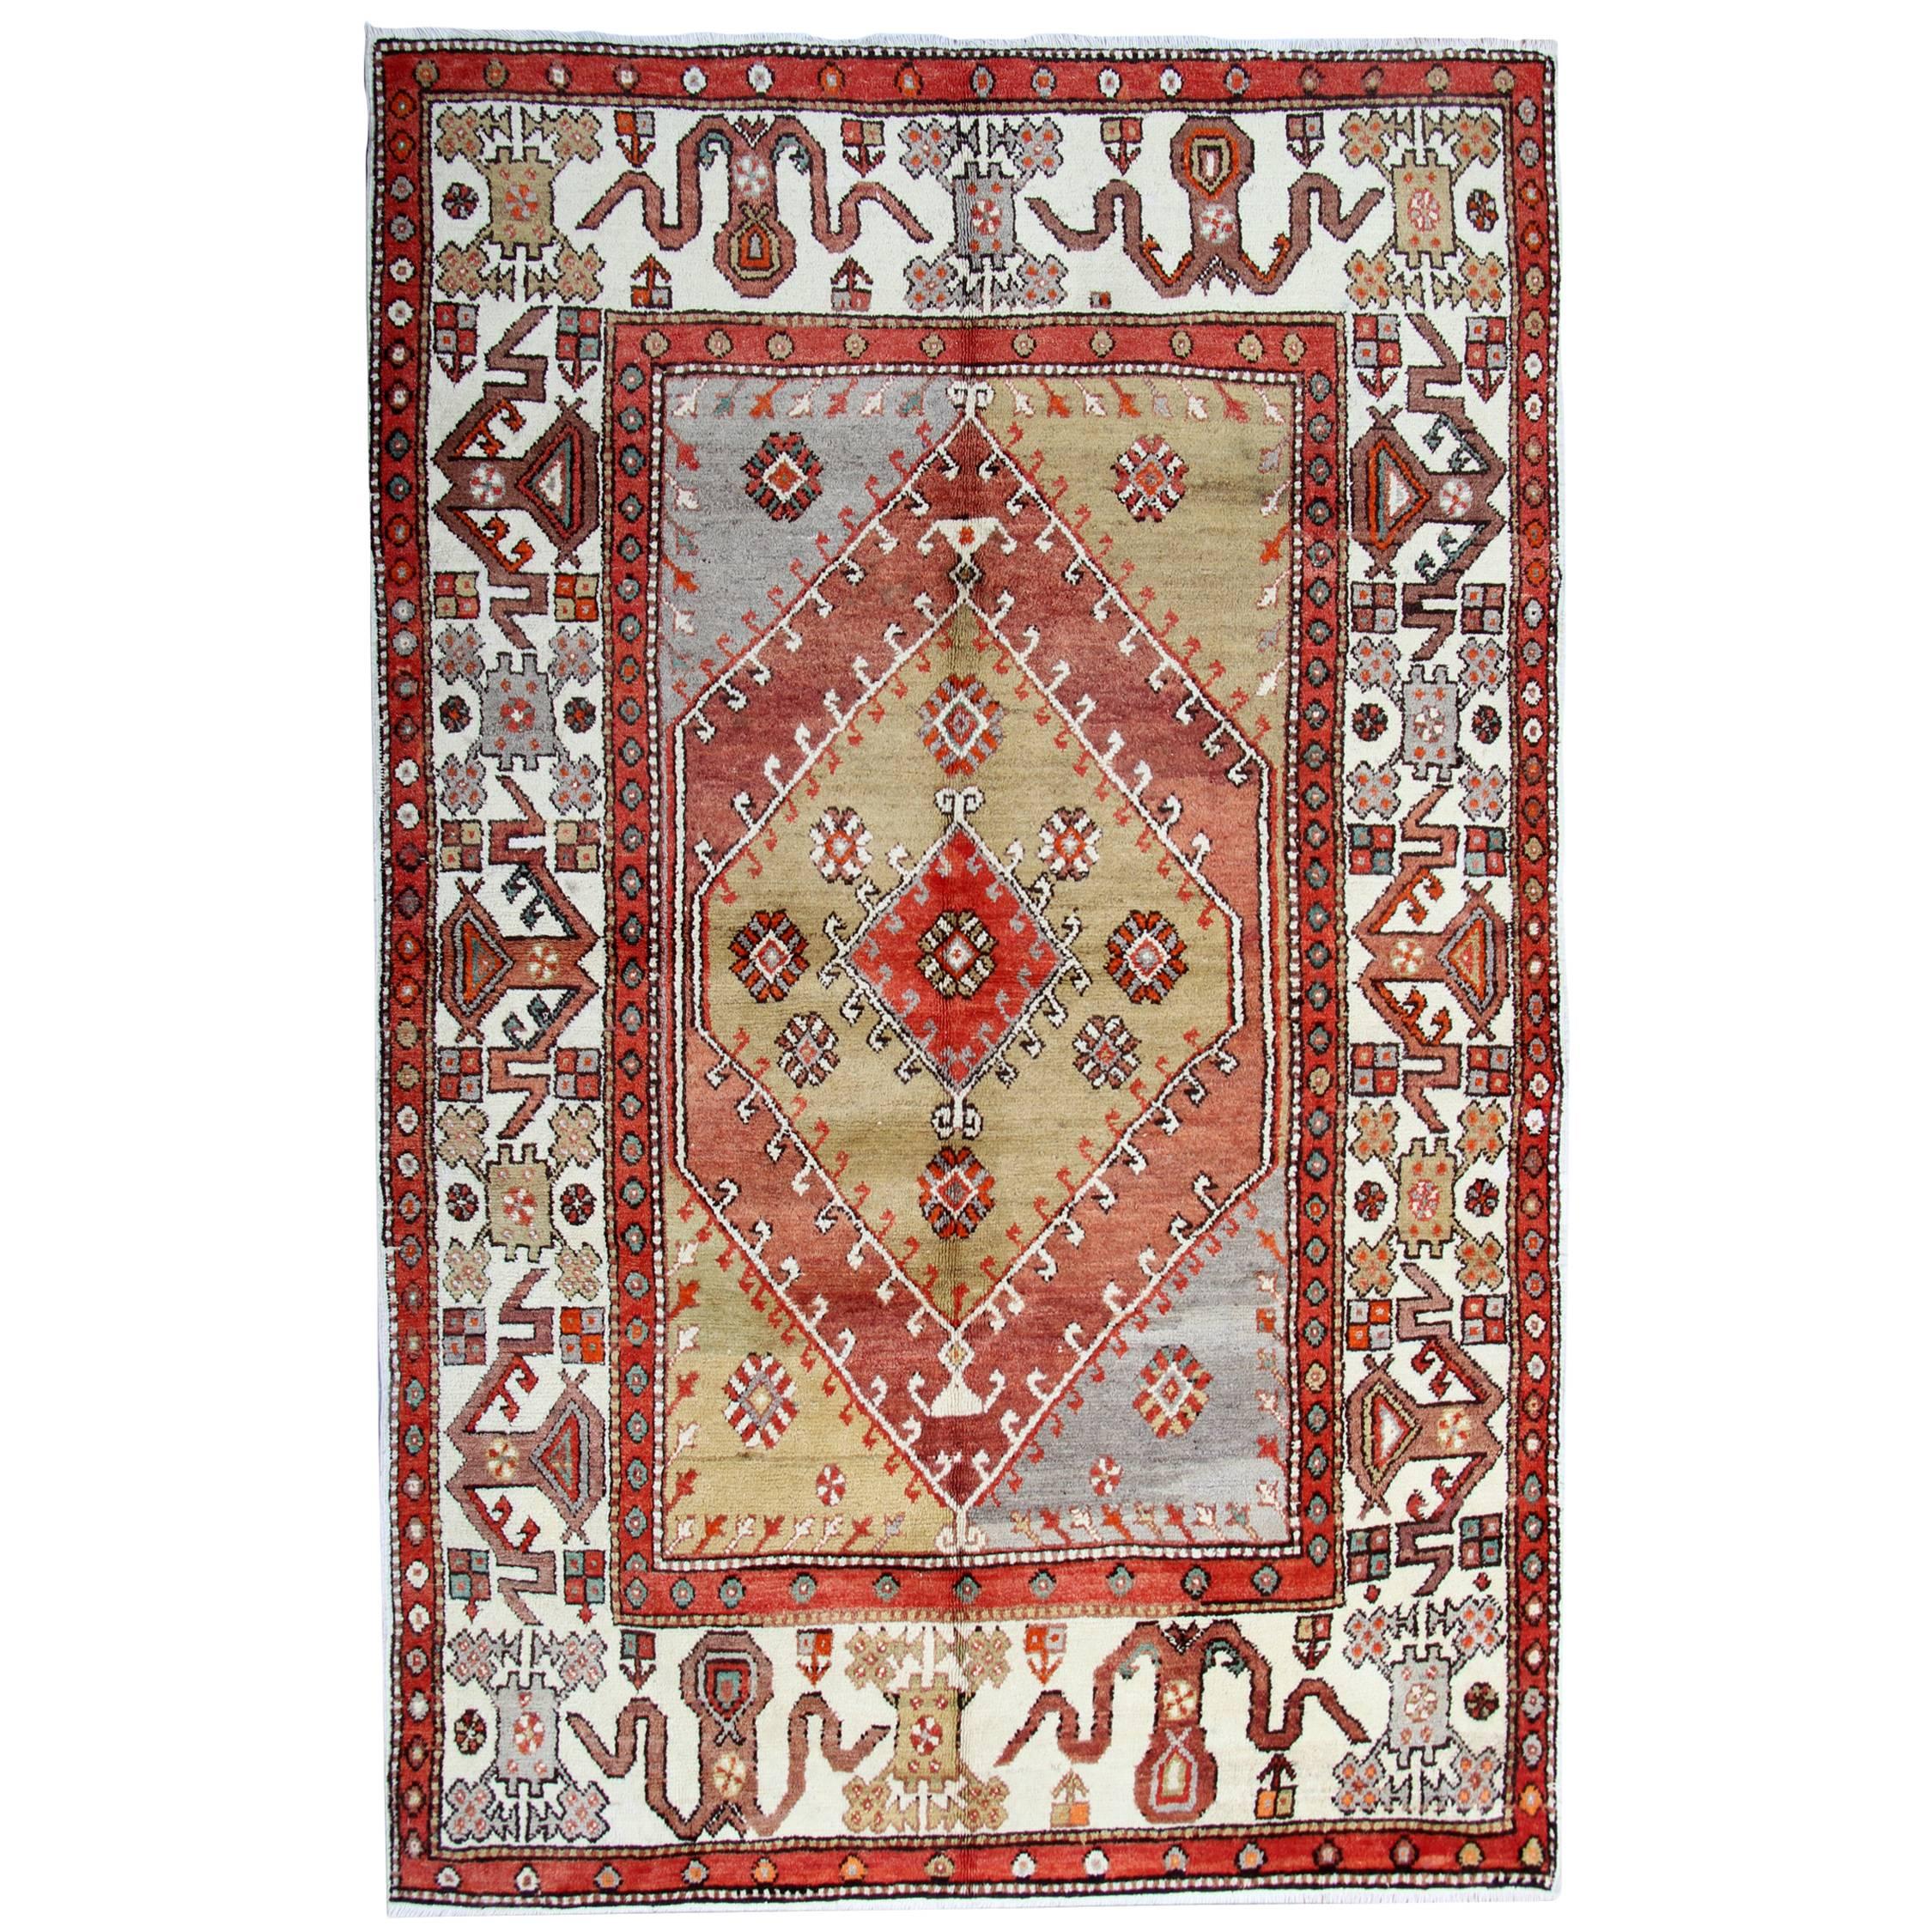 Handmade Carpet Antique Rug, Turkish Rug, Wool Oriental Rug Knitted Carpet